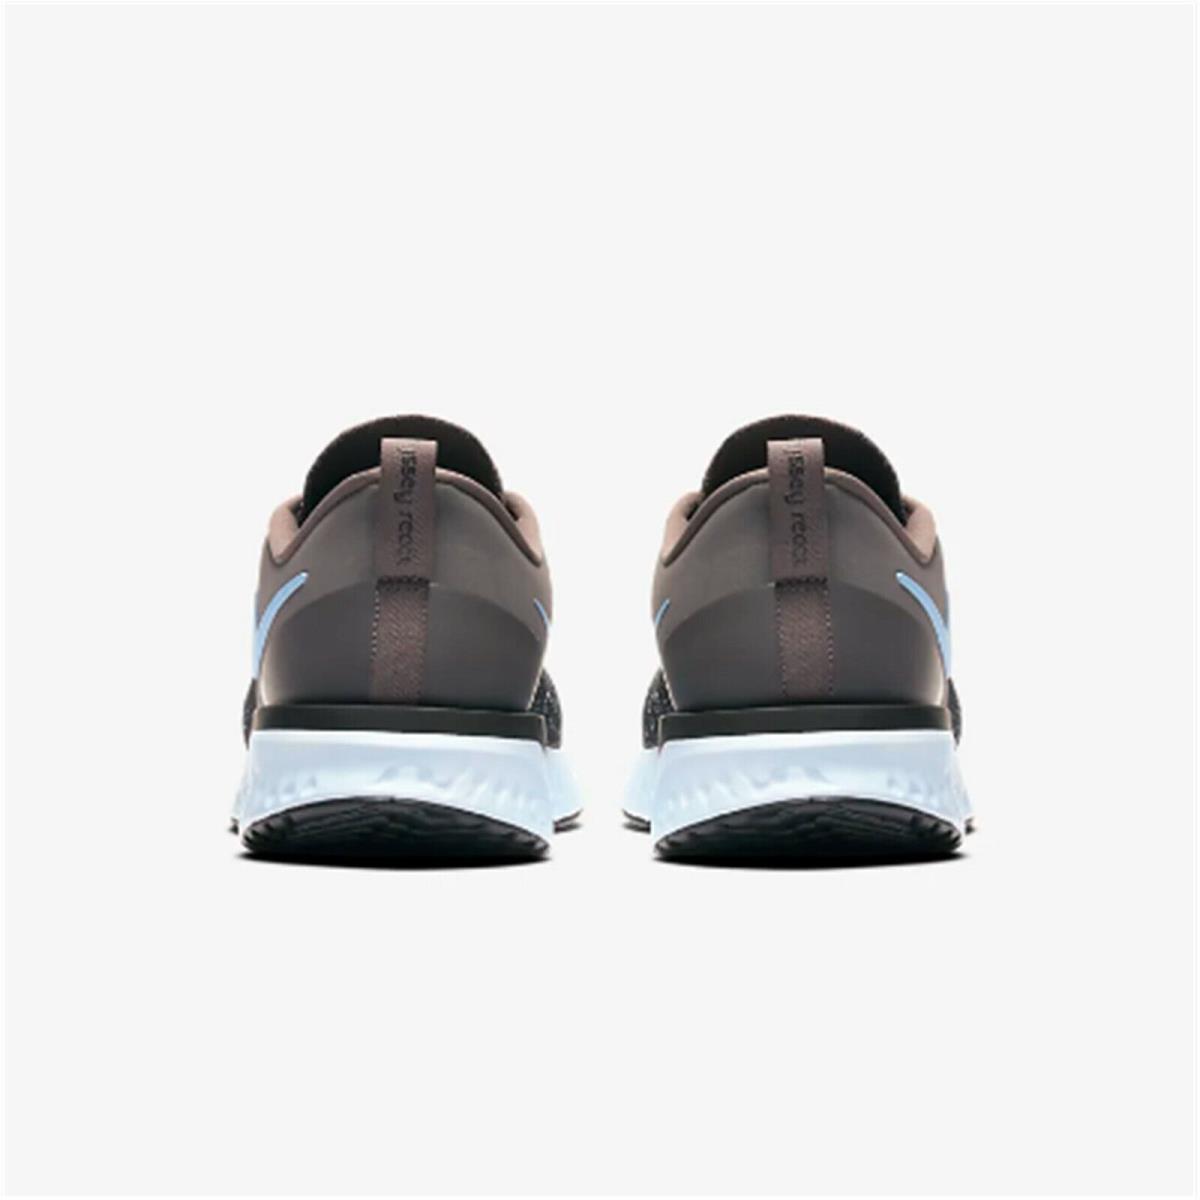 Nike shoes Odyssey React Flyknit - THUNDER GREY/LIGHT BLUE-BLACK , THUNDER GREY/LIGHT BLUE-BLACK Manufacturer 6